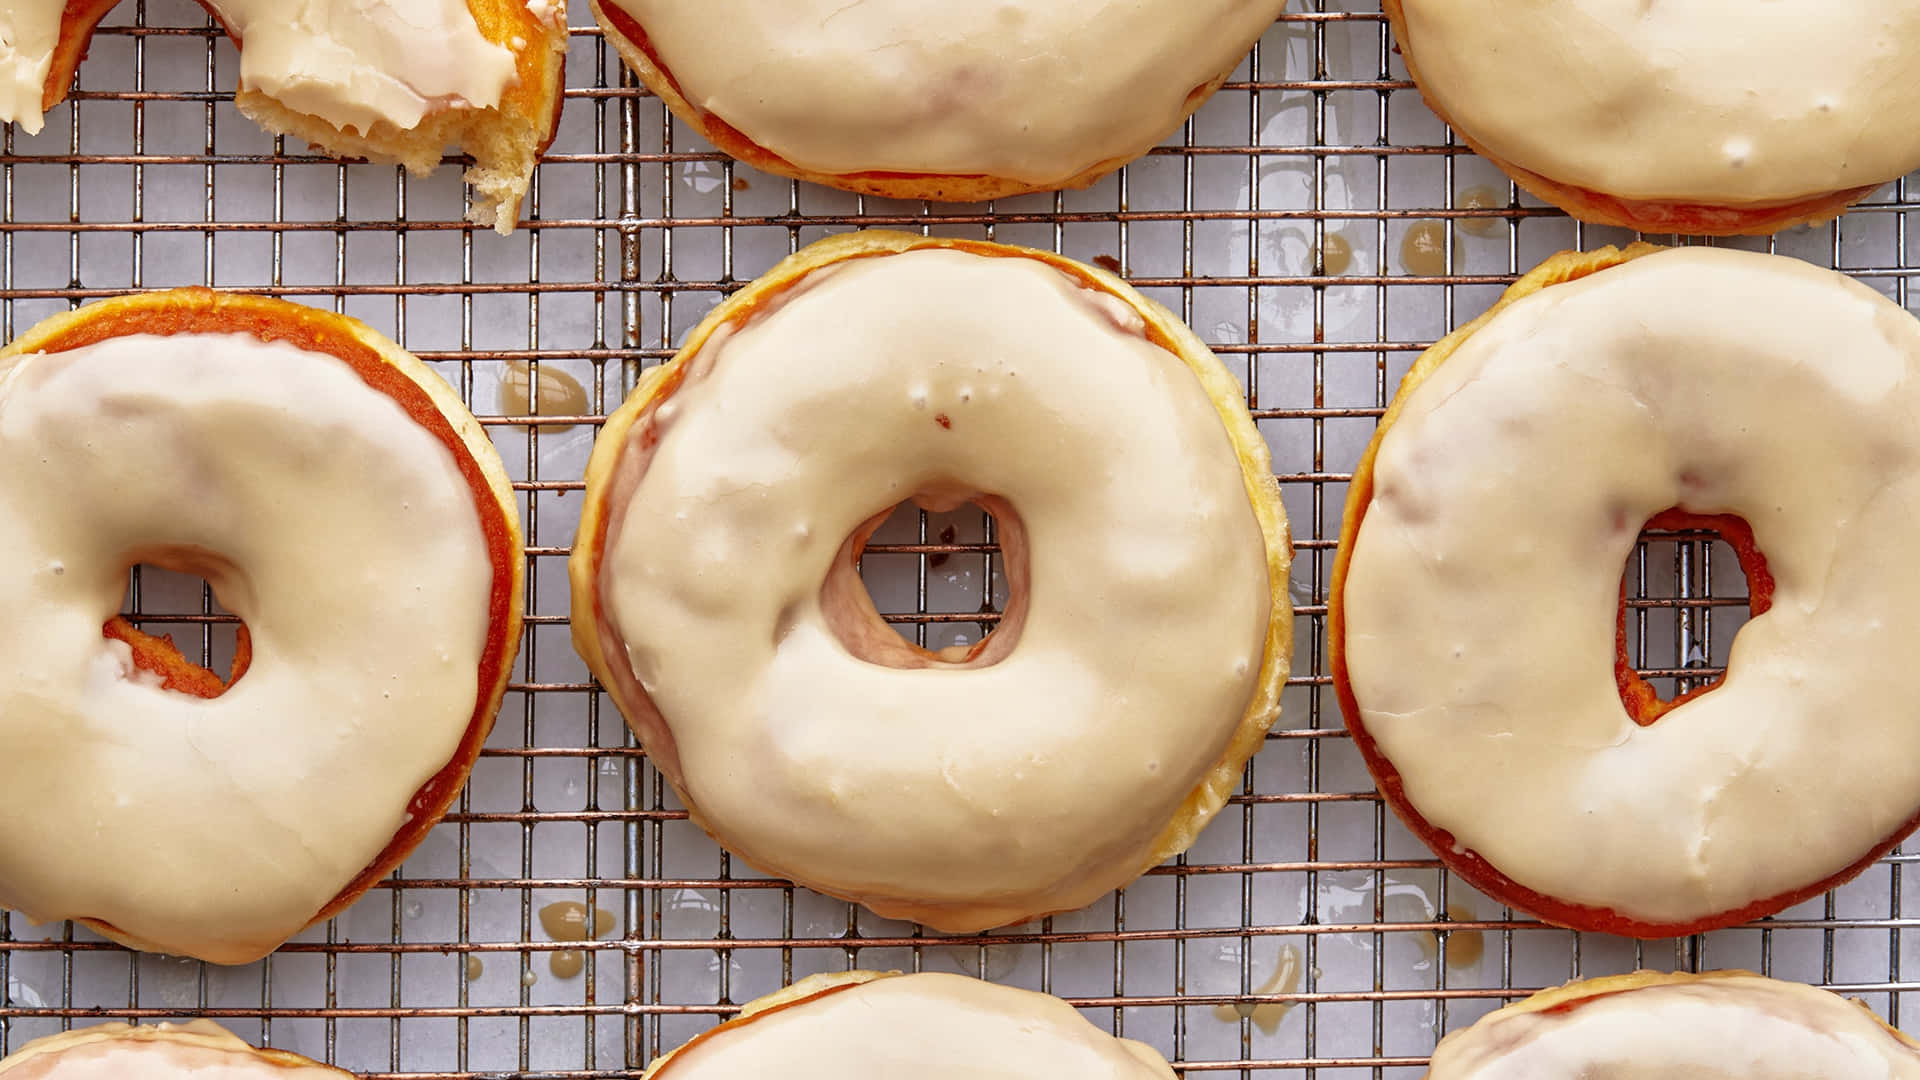 Sweet, Delicious Glazed Donut Wallpaper